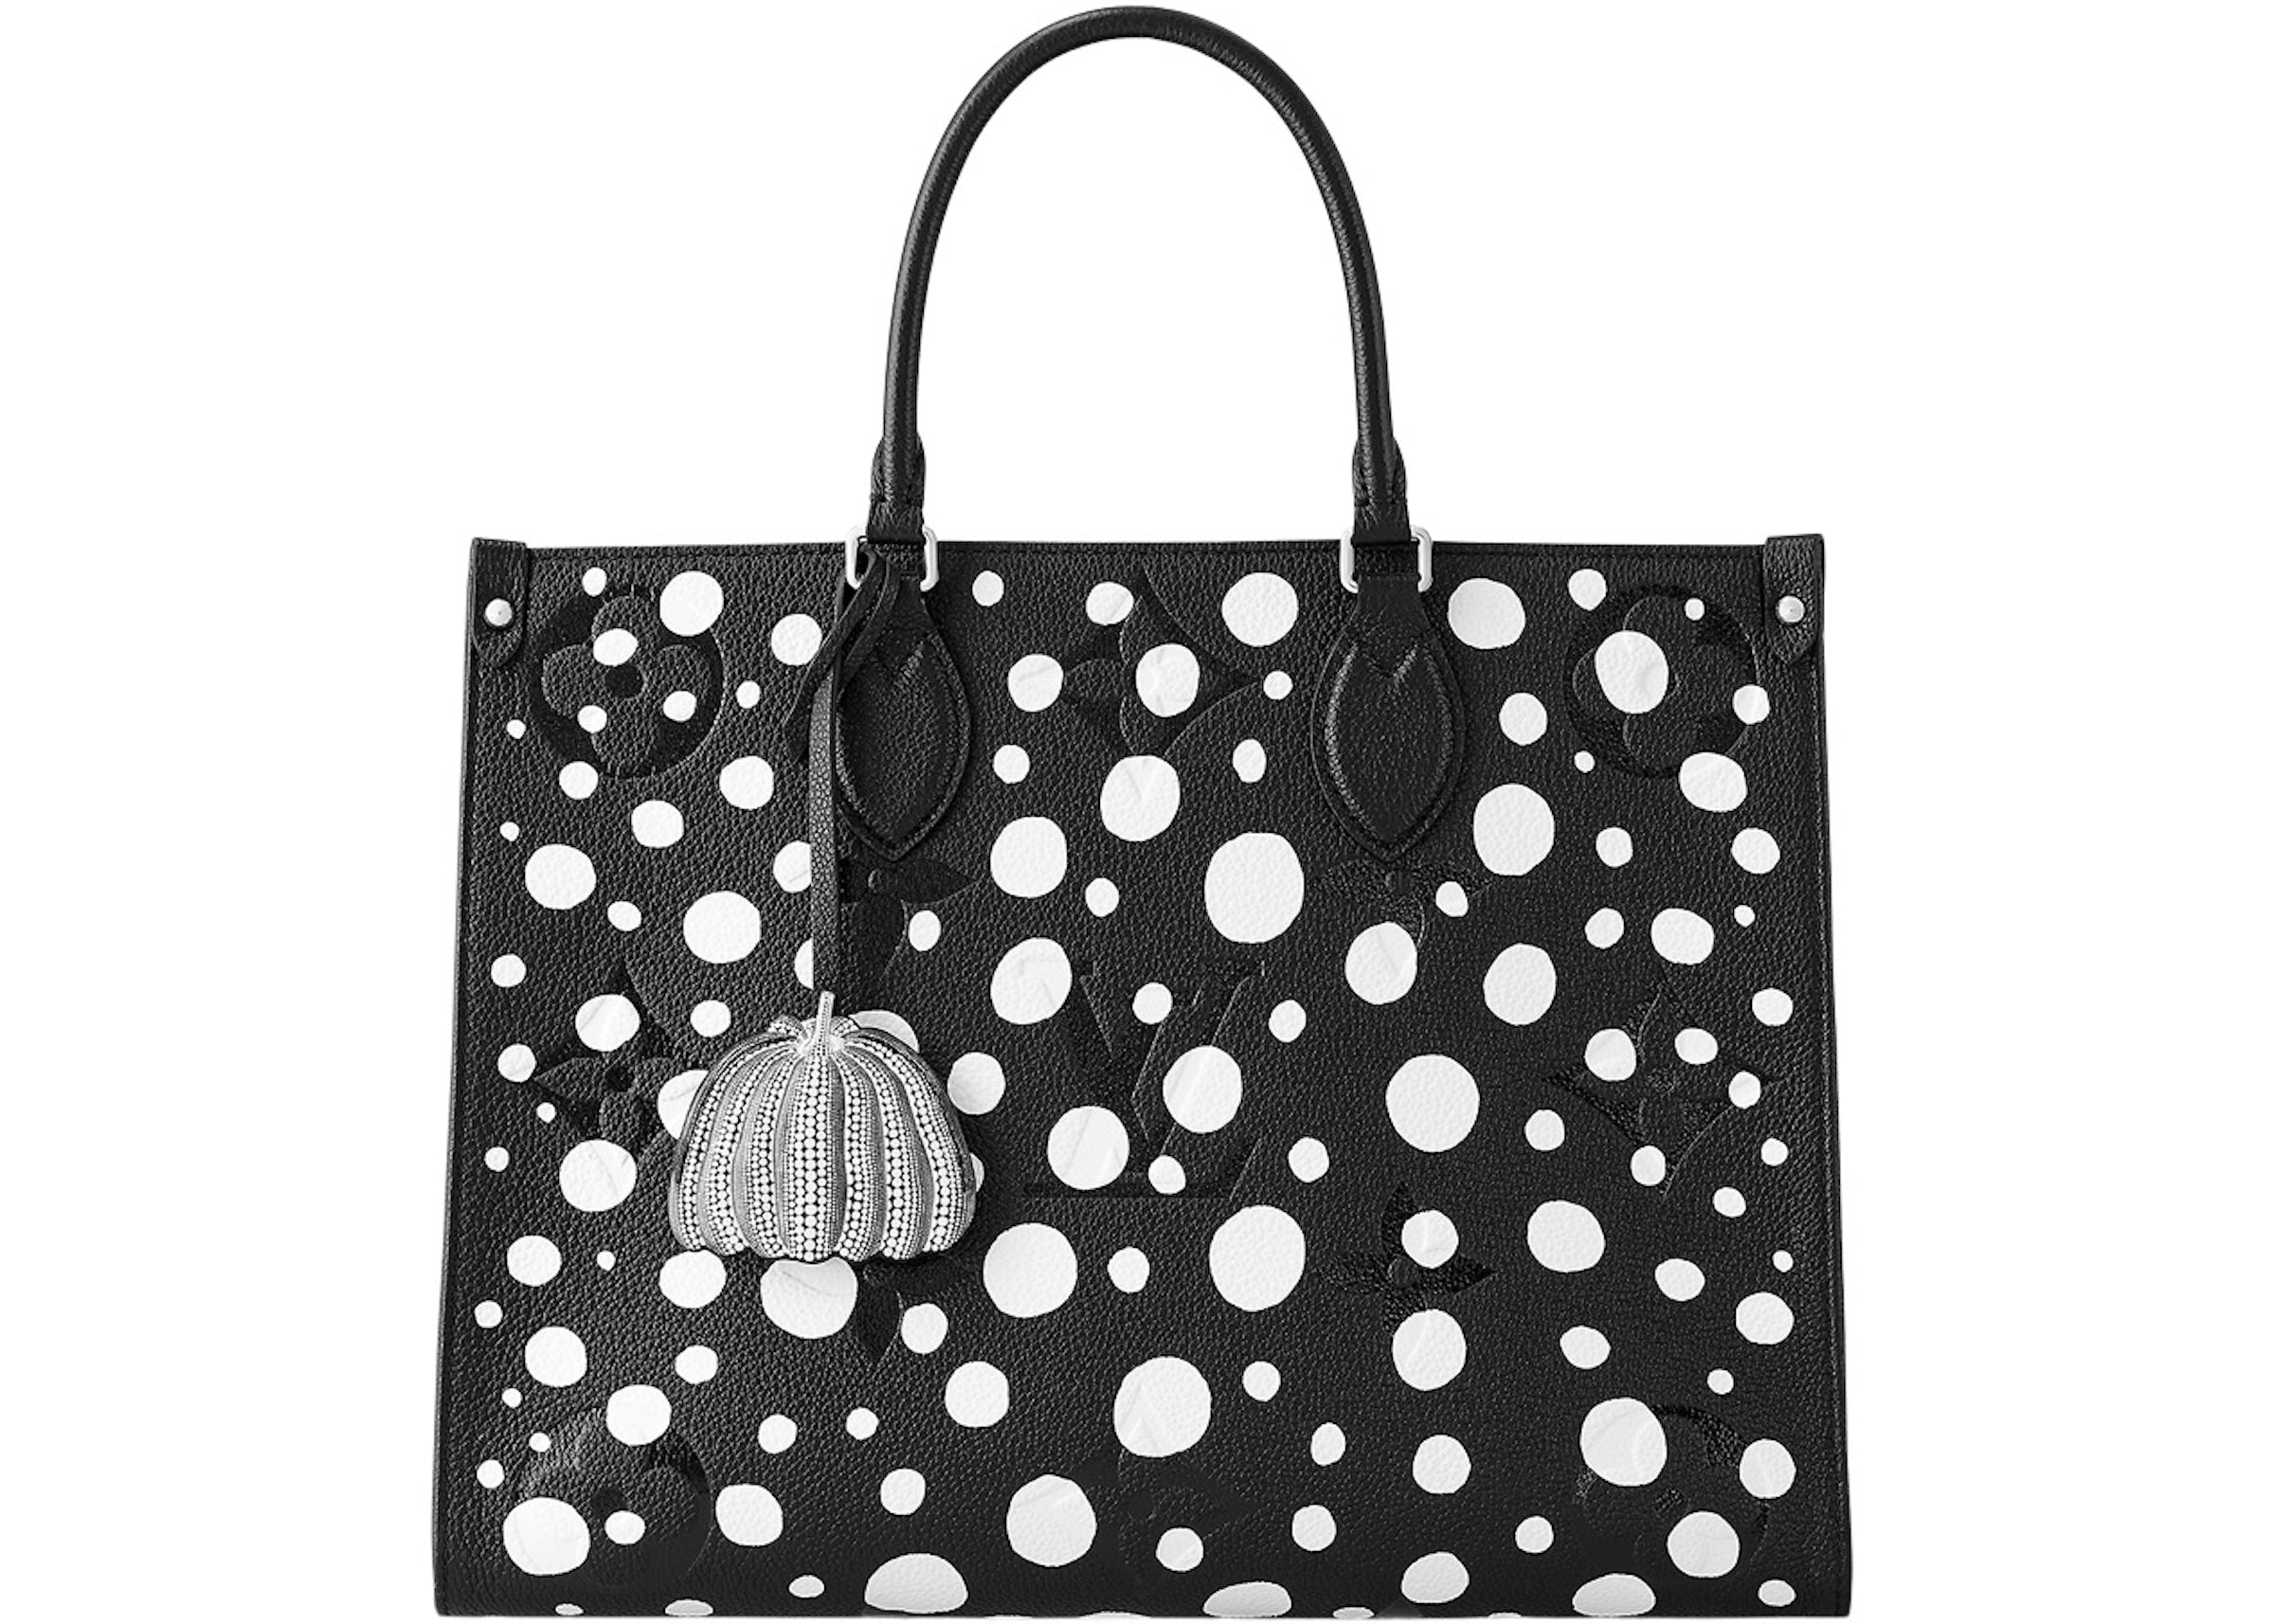 lv tote bag black and white